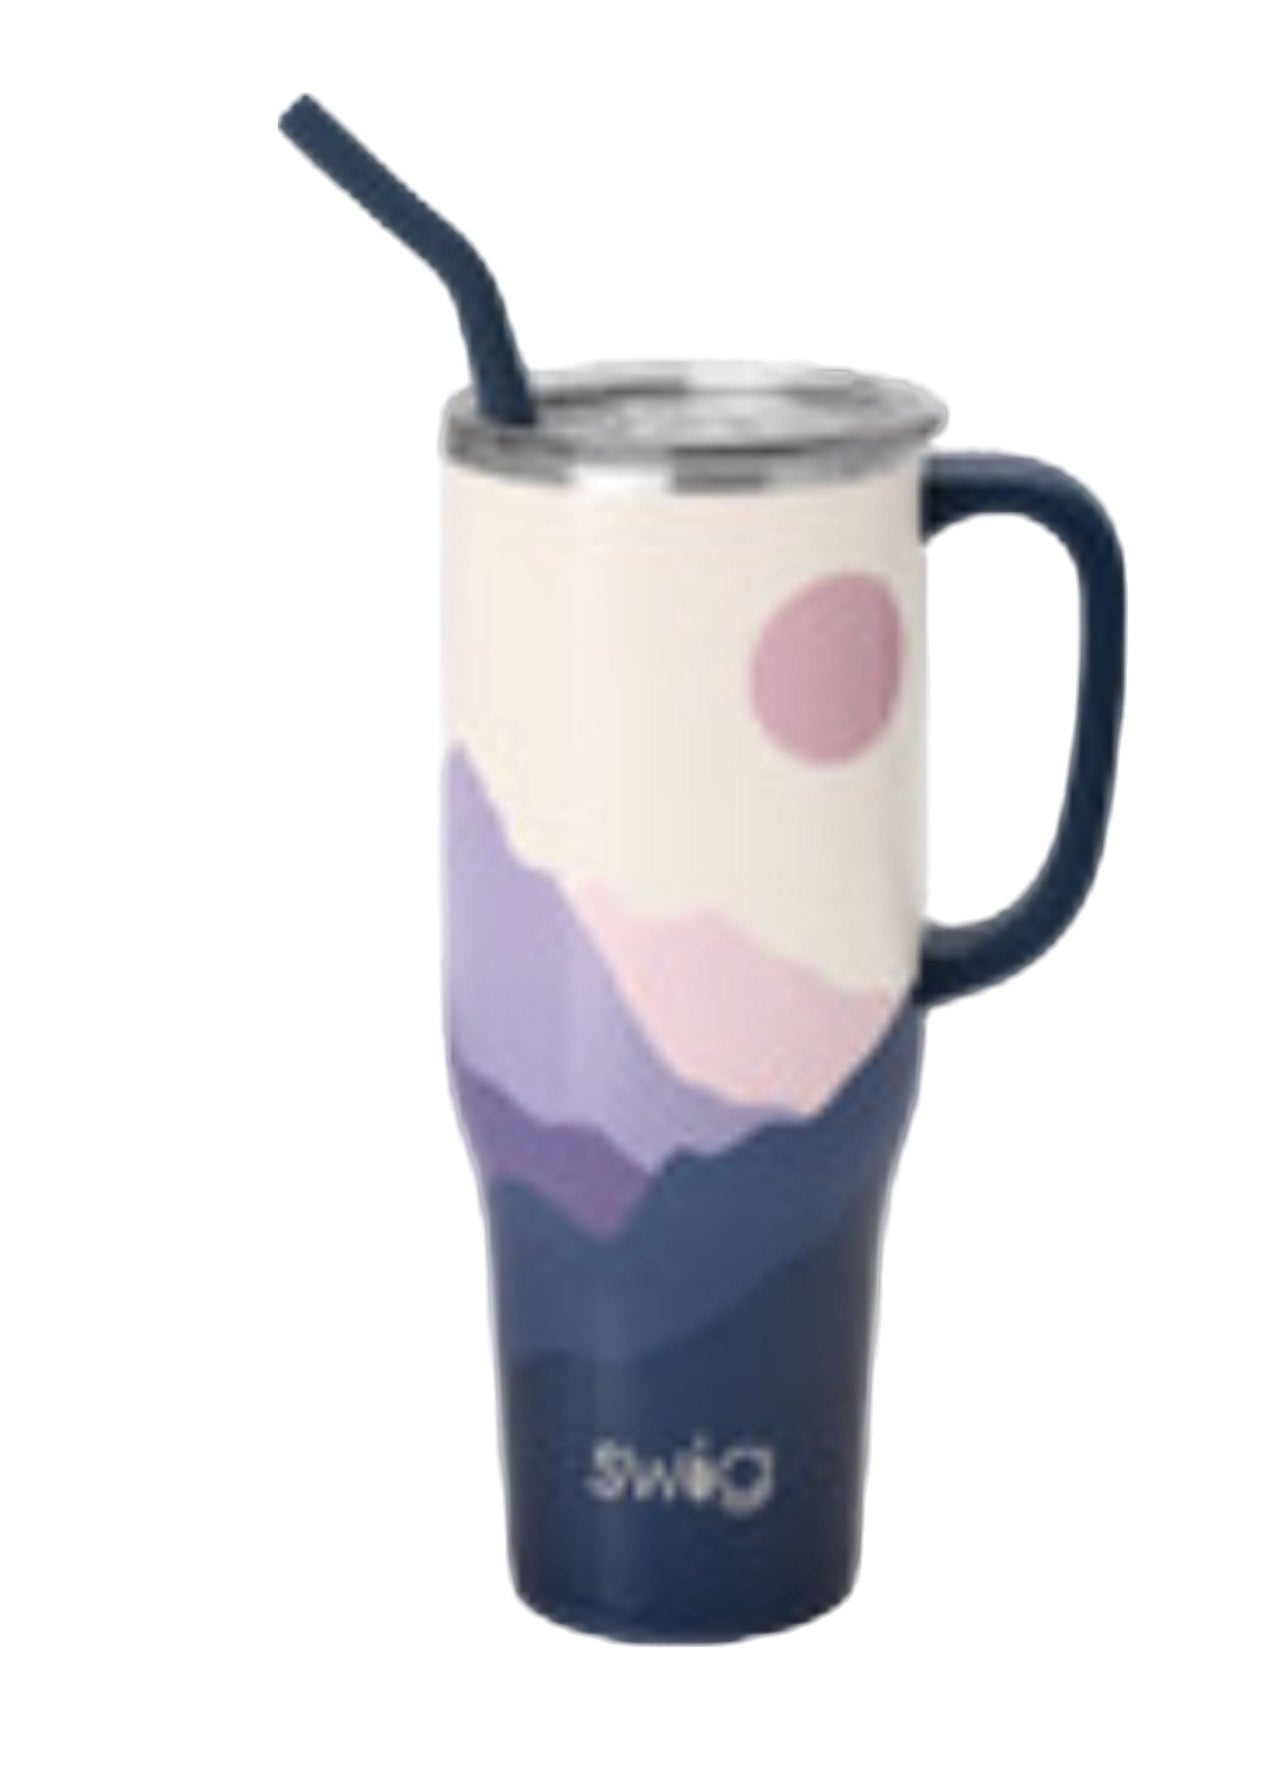 Swig Peak Season Travel Mug (22oz)